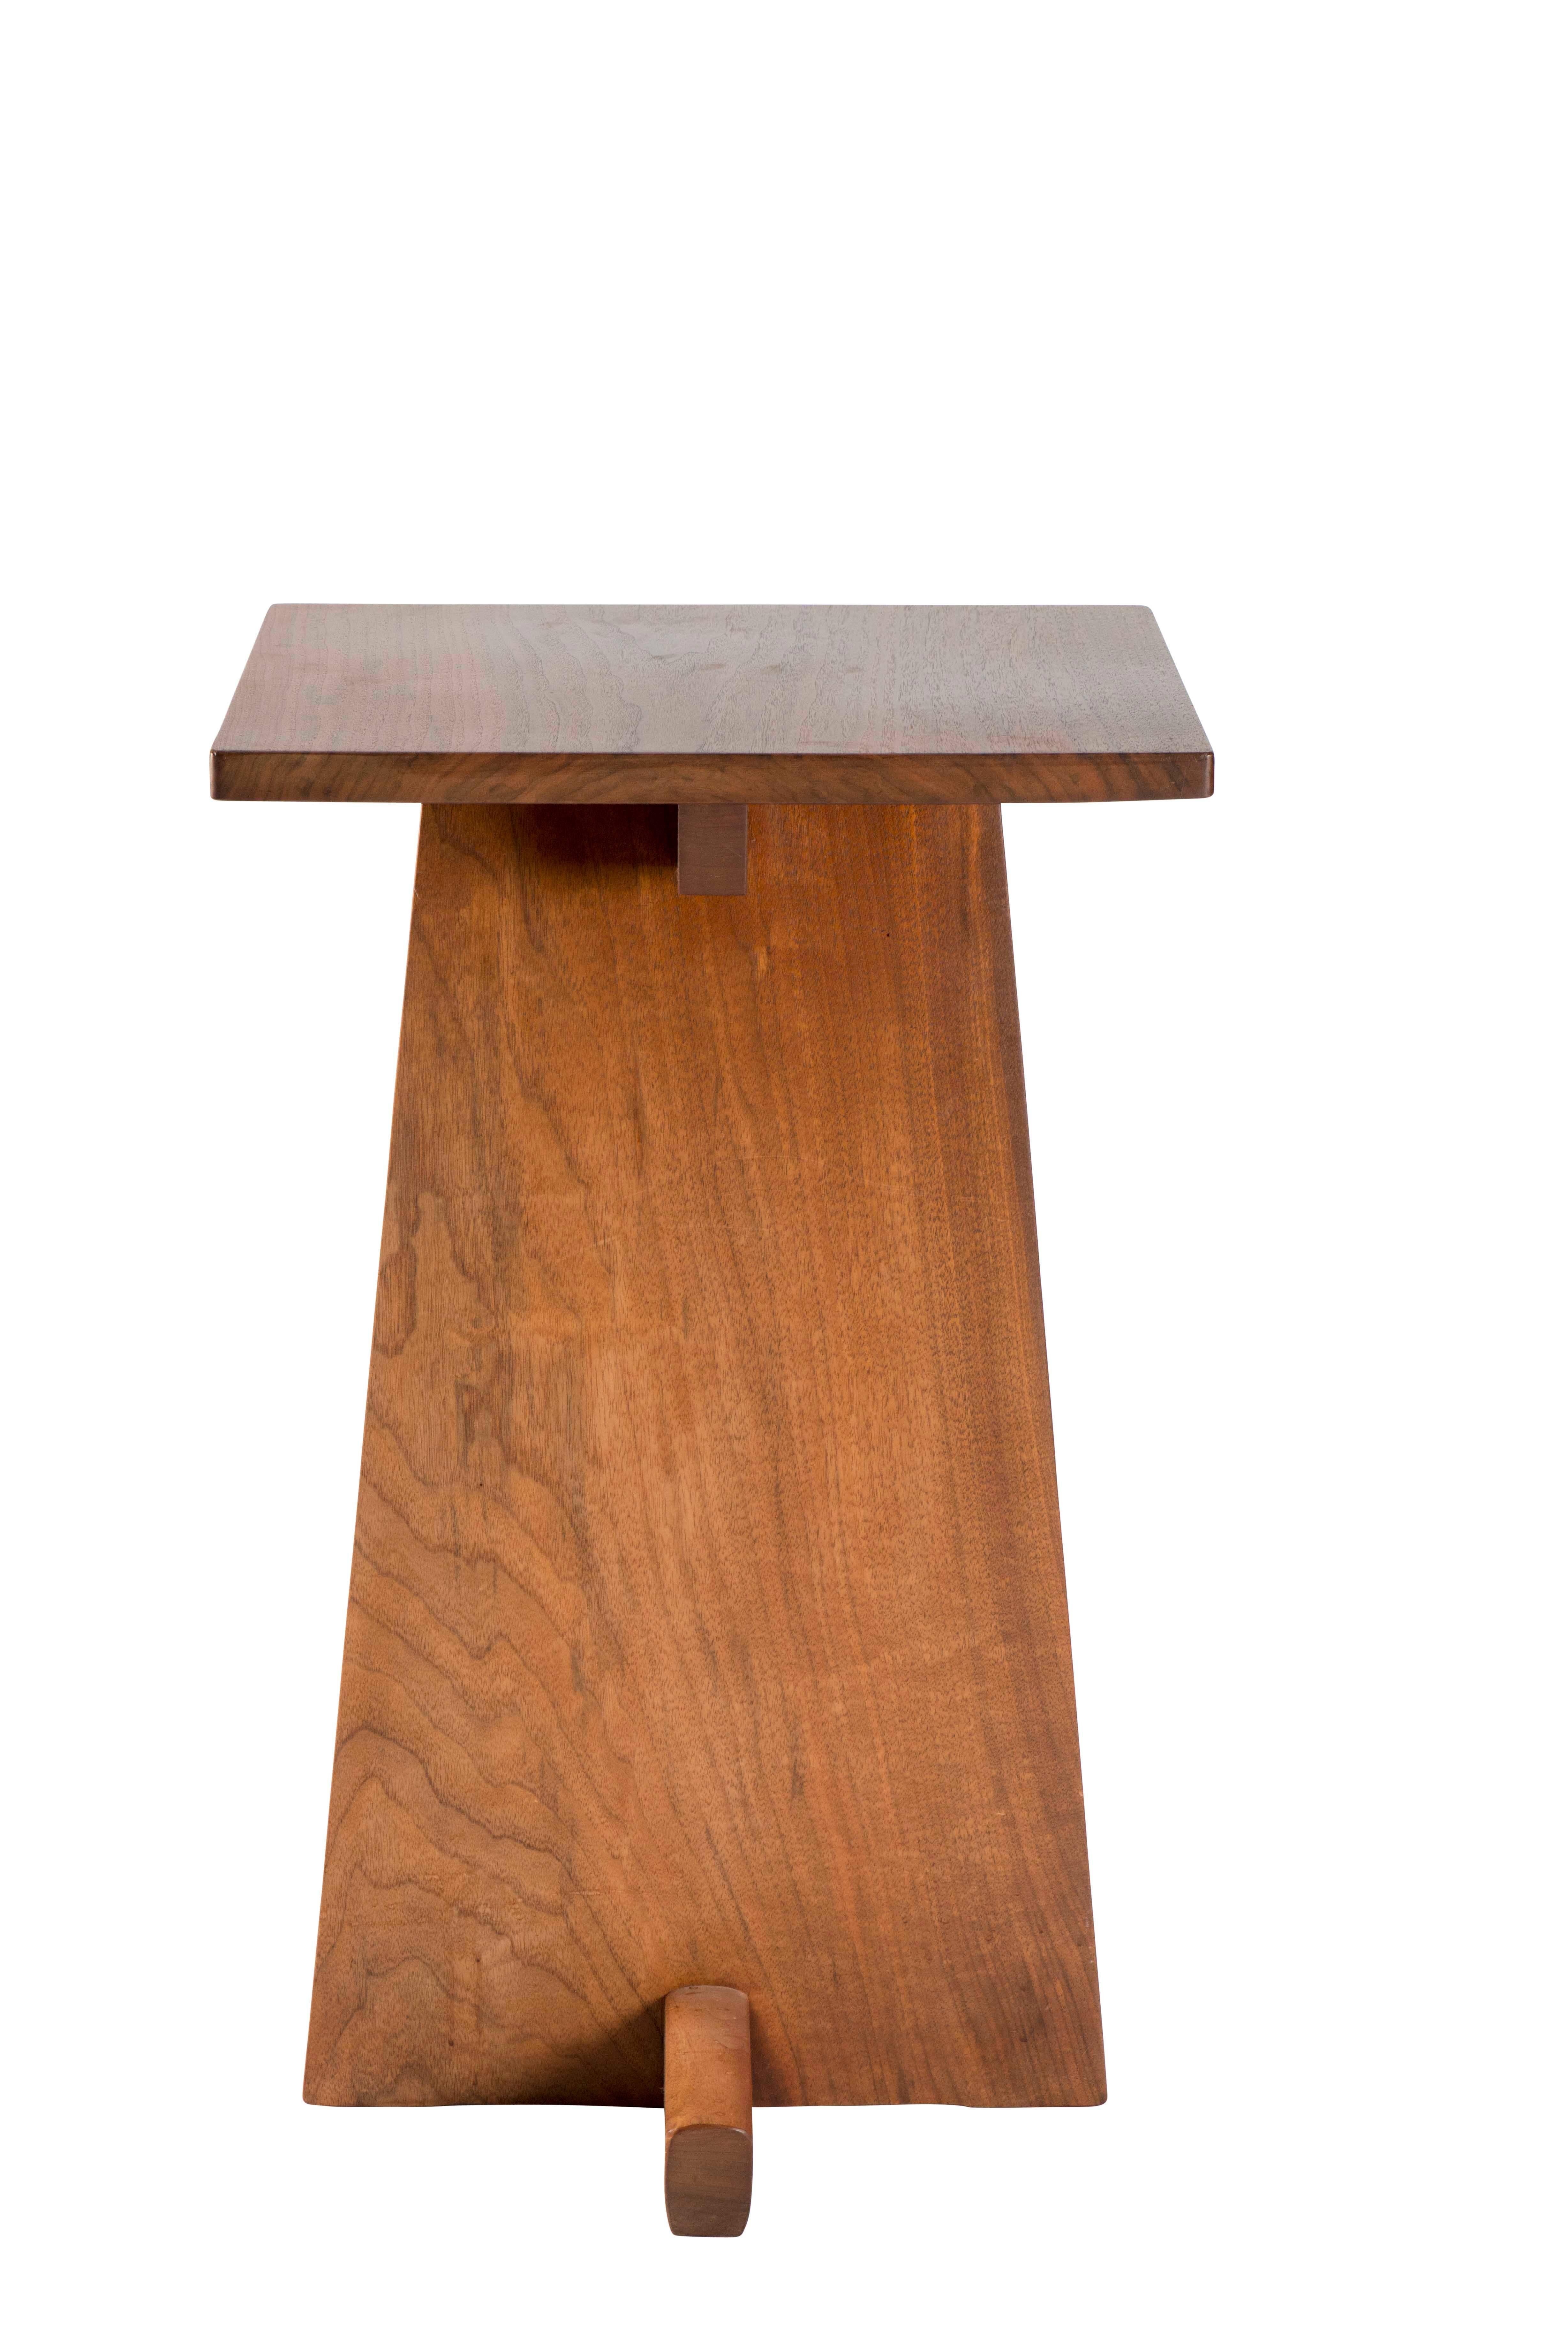 American George Nakashima Pedestal Table